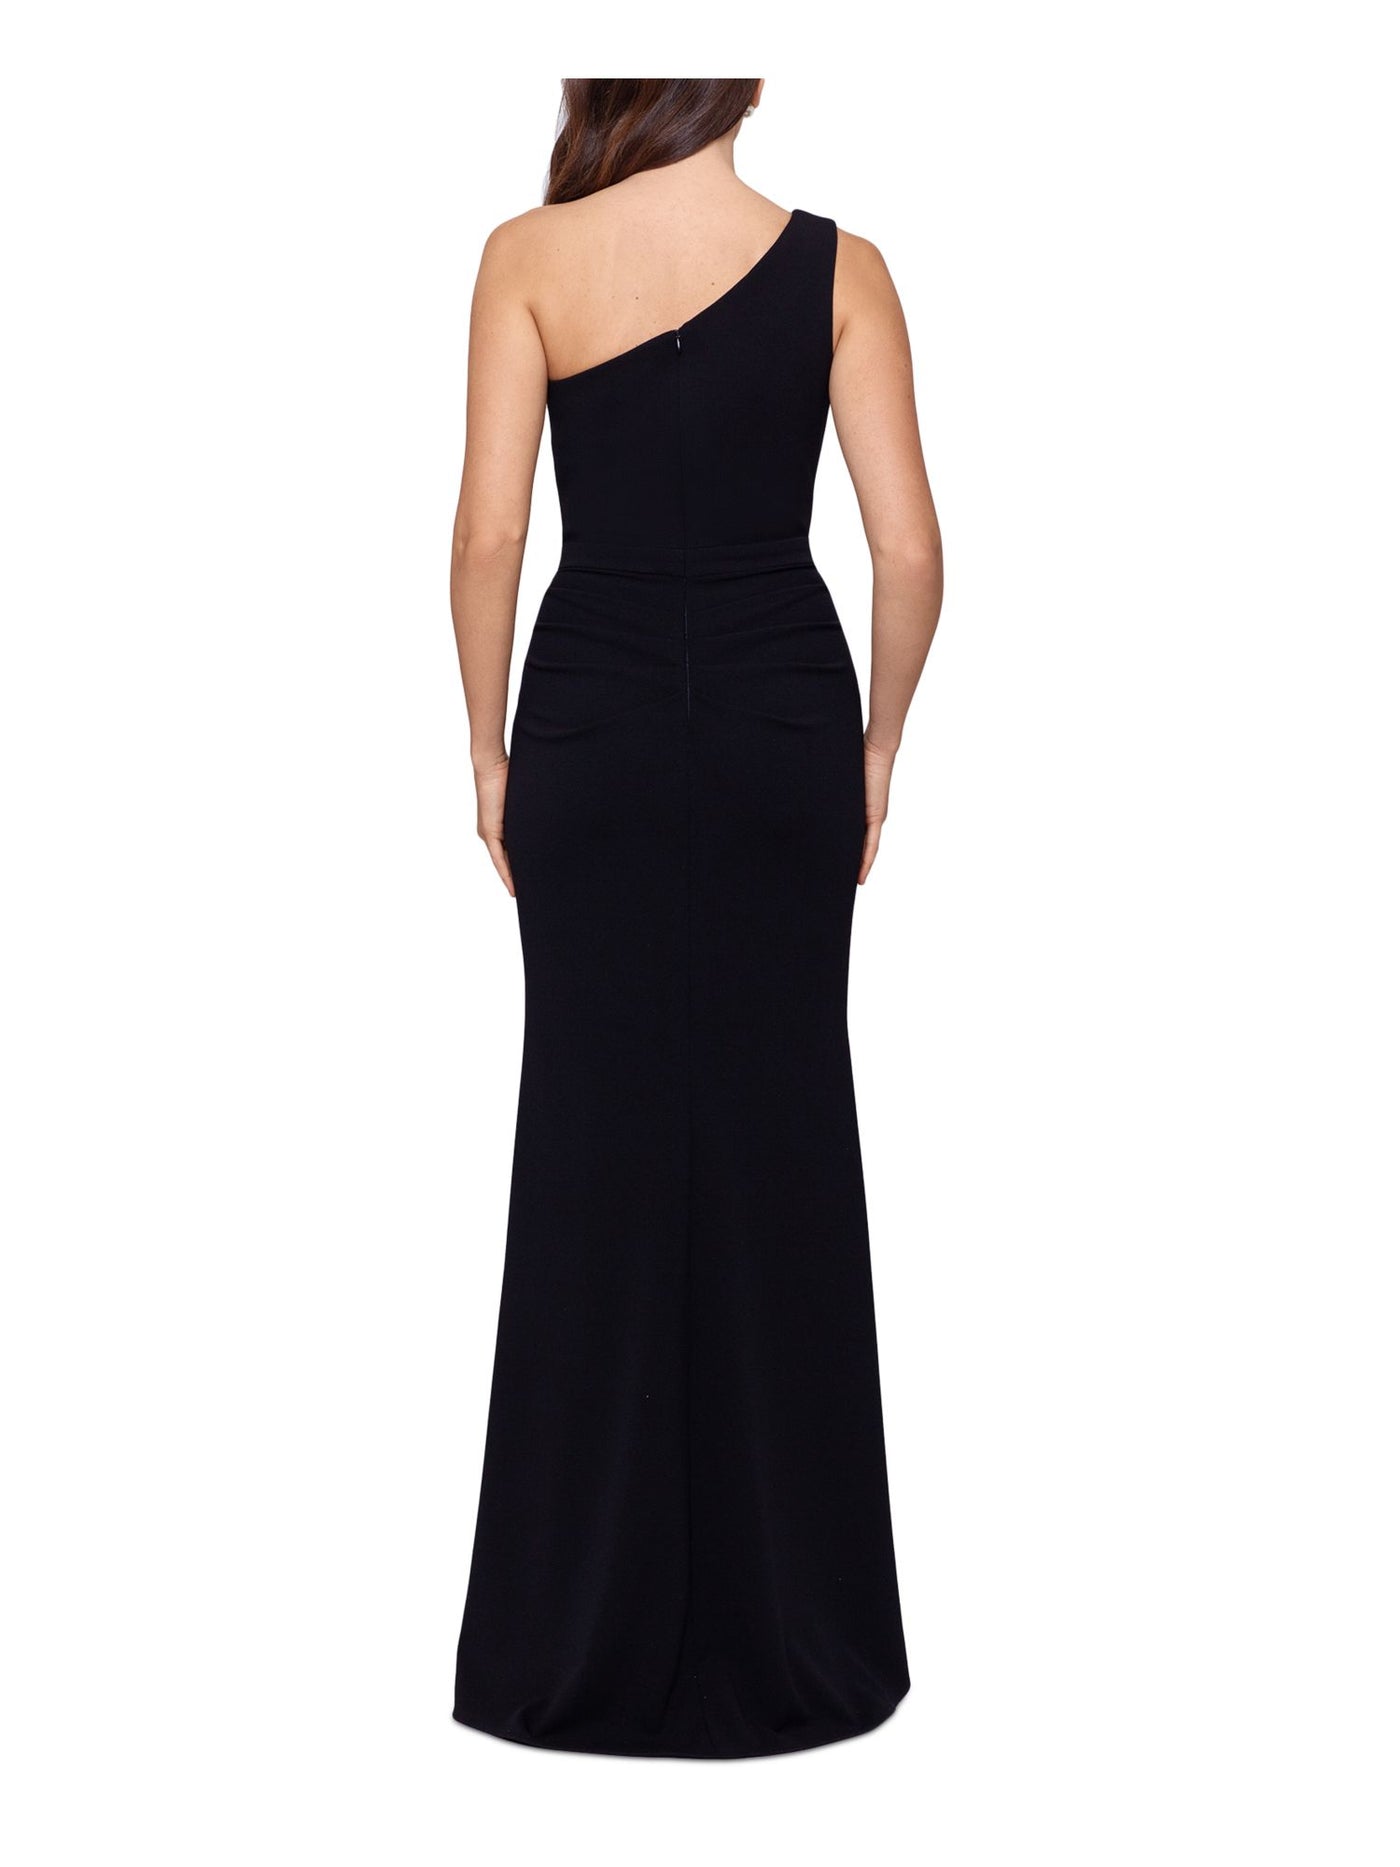 XSCAPE Womens Black Cut Out Zippered High Slit Fitted Scuba Crepe Sleeveless Asymmetrical Neckline Full-Length Evening Gown Dress 2